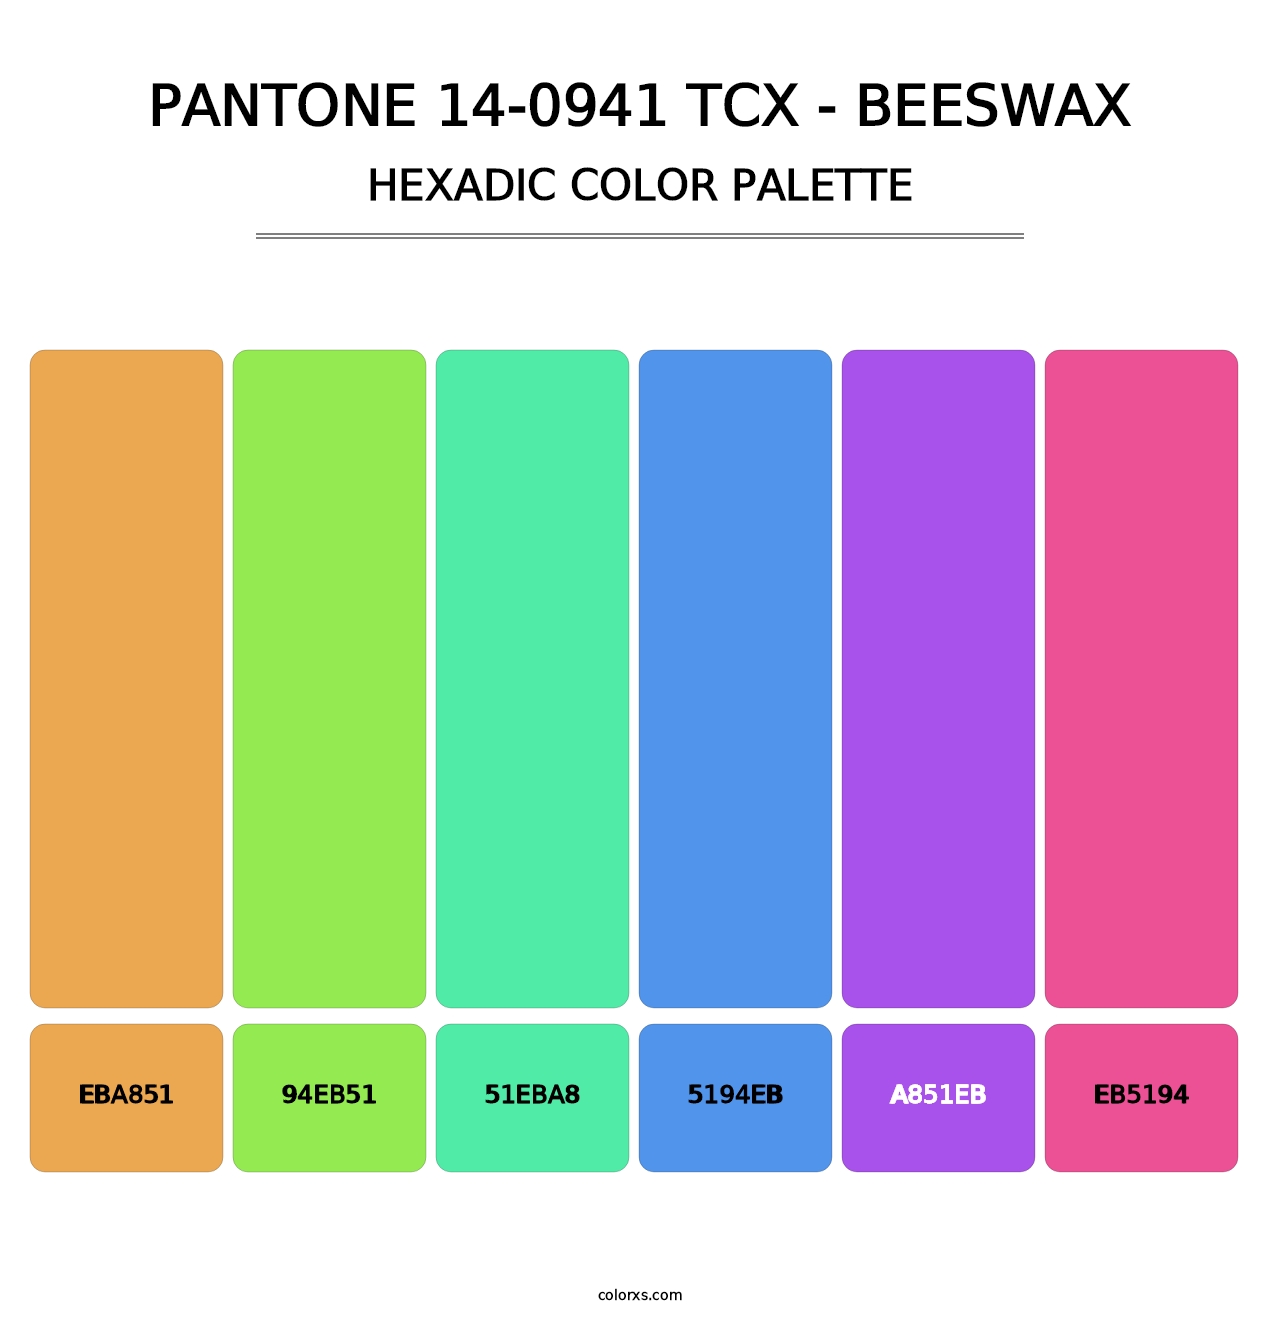 PANTONE 14-0941 TCX - Beeswax - Hexadic Color Palette